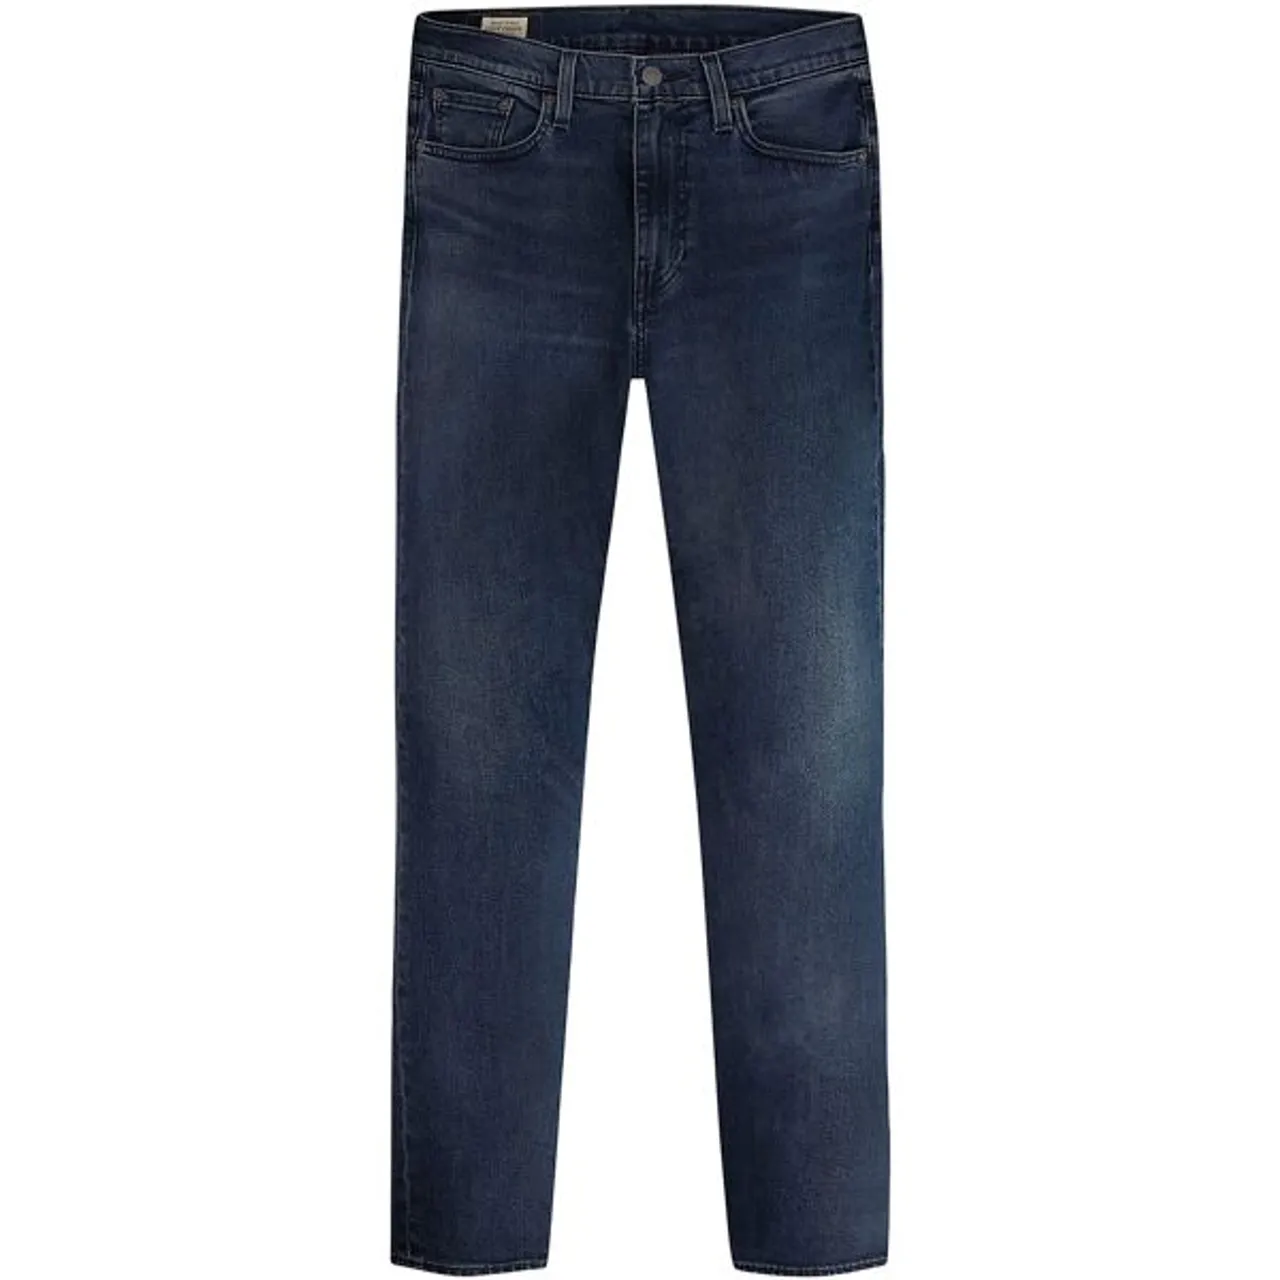 Tapered-fit-Jeans LEVI'S "512 Slim Taper Fit" Gr. 33, Länge 36, schwarz (dark black stonewash) Herren Jeans Tapered-Jeans